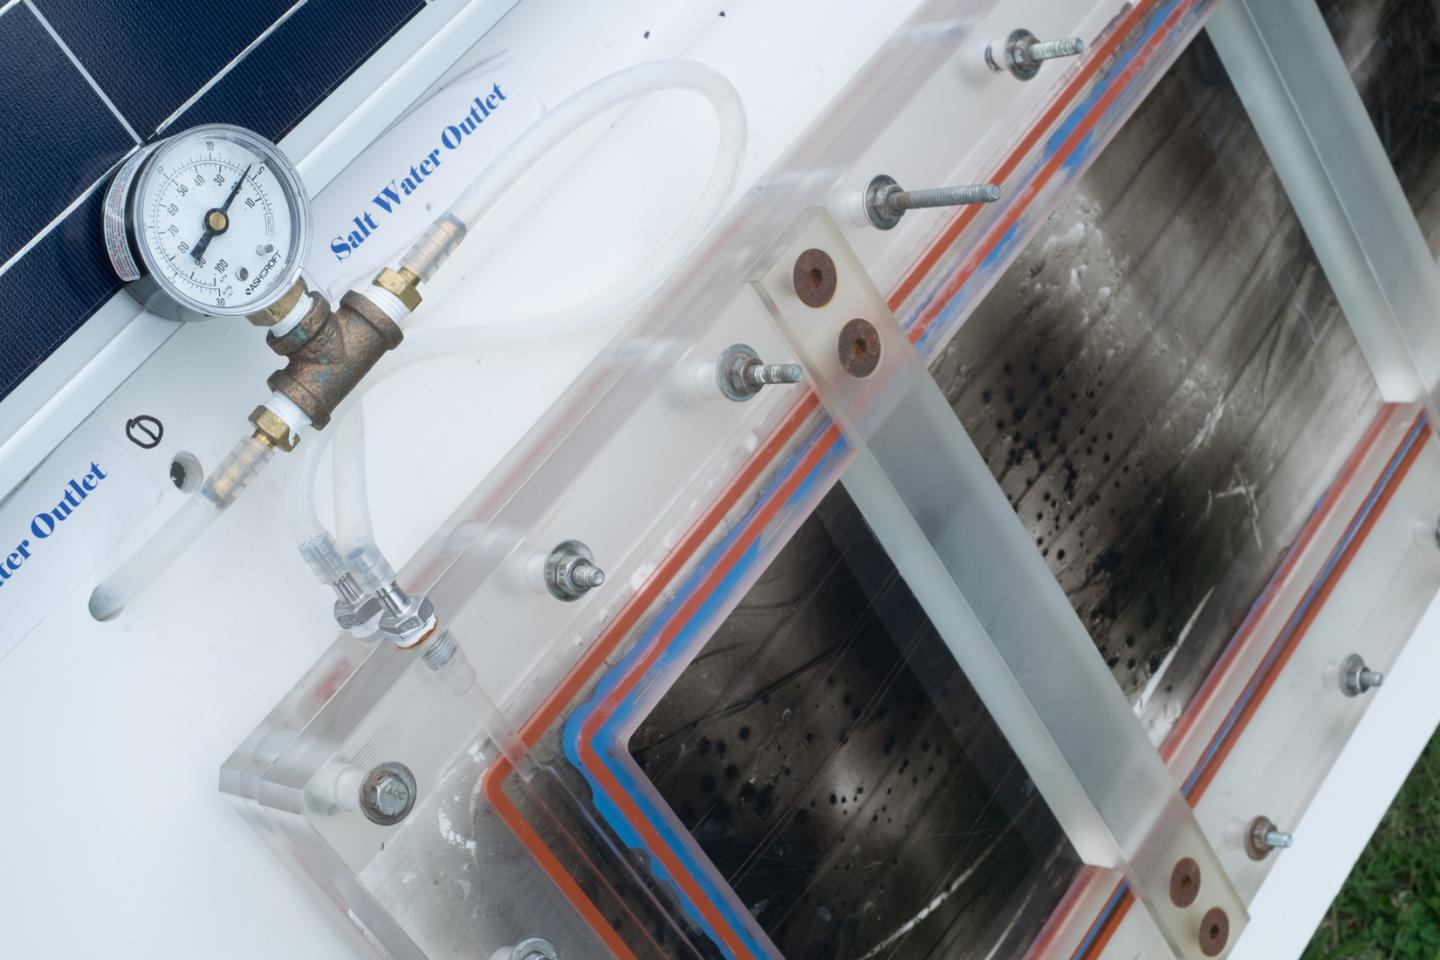 Rice University's Solar Desalination Prototype